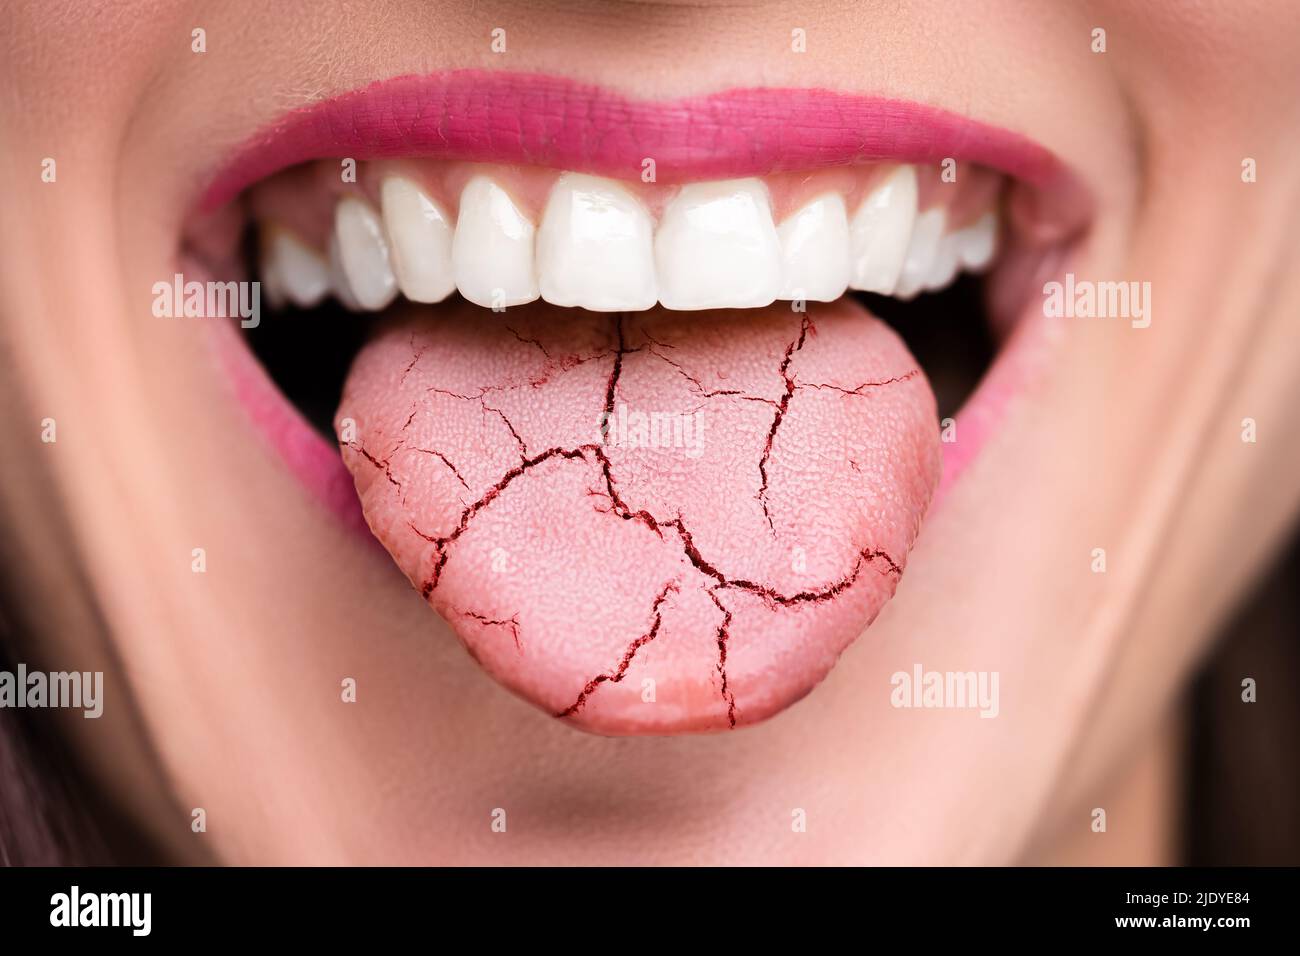 Candidiasis oral fotografías e imágenes de alta resolución - Alamy